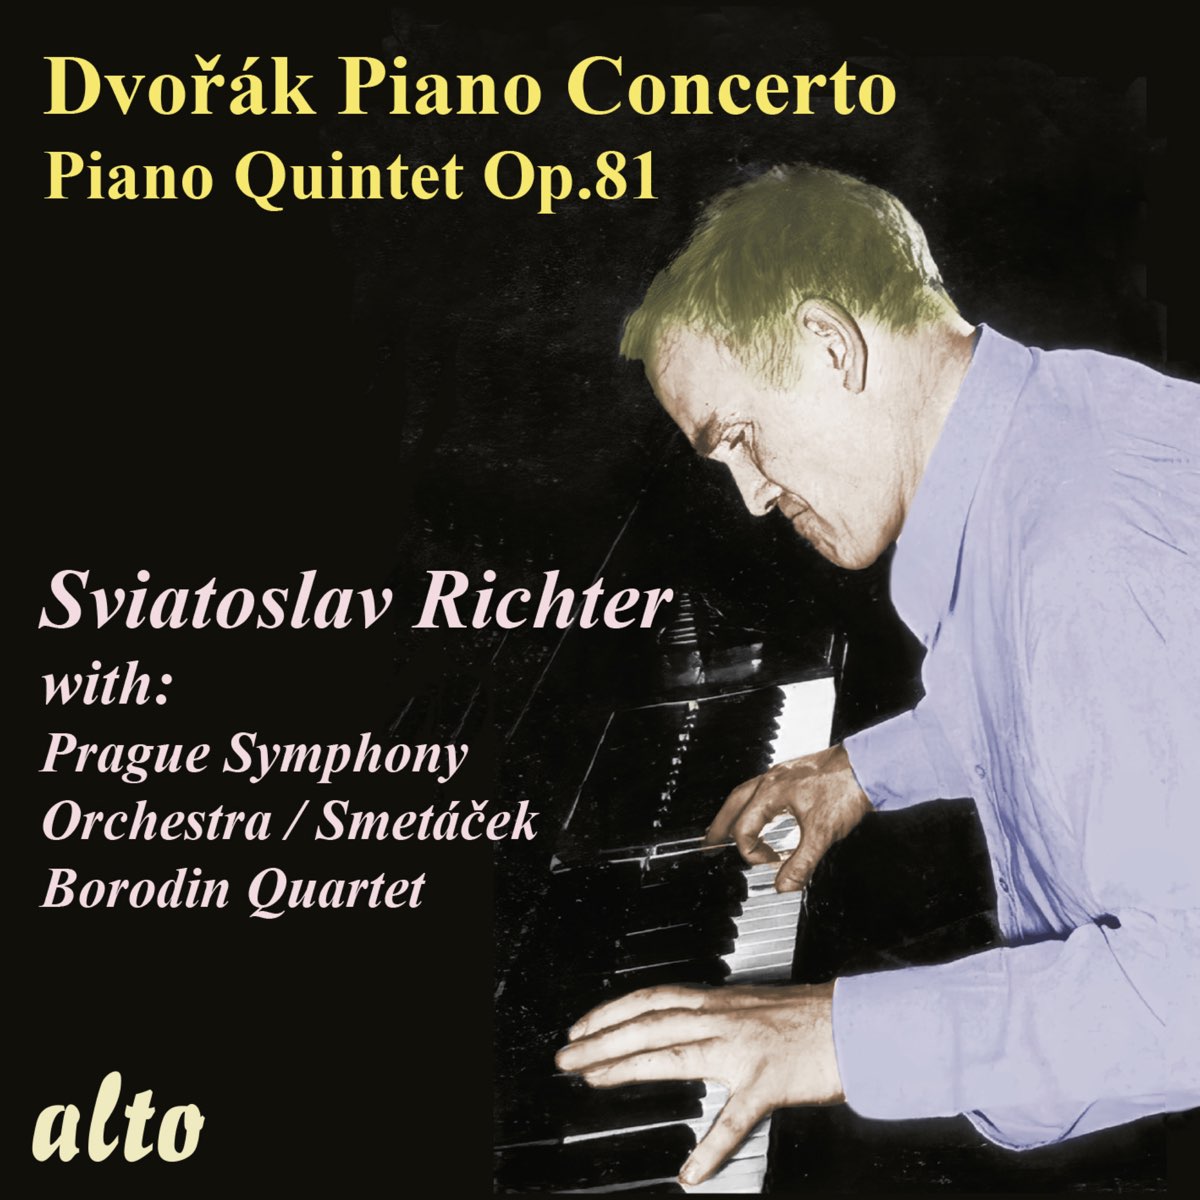 Dvořák: Piano Concerto, Piano Quintet - Album by Sviatoslav Richter, Václav  Smetáček & Prague Symphony Orchestra - Apple Music